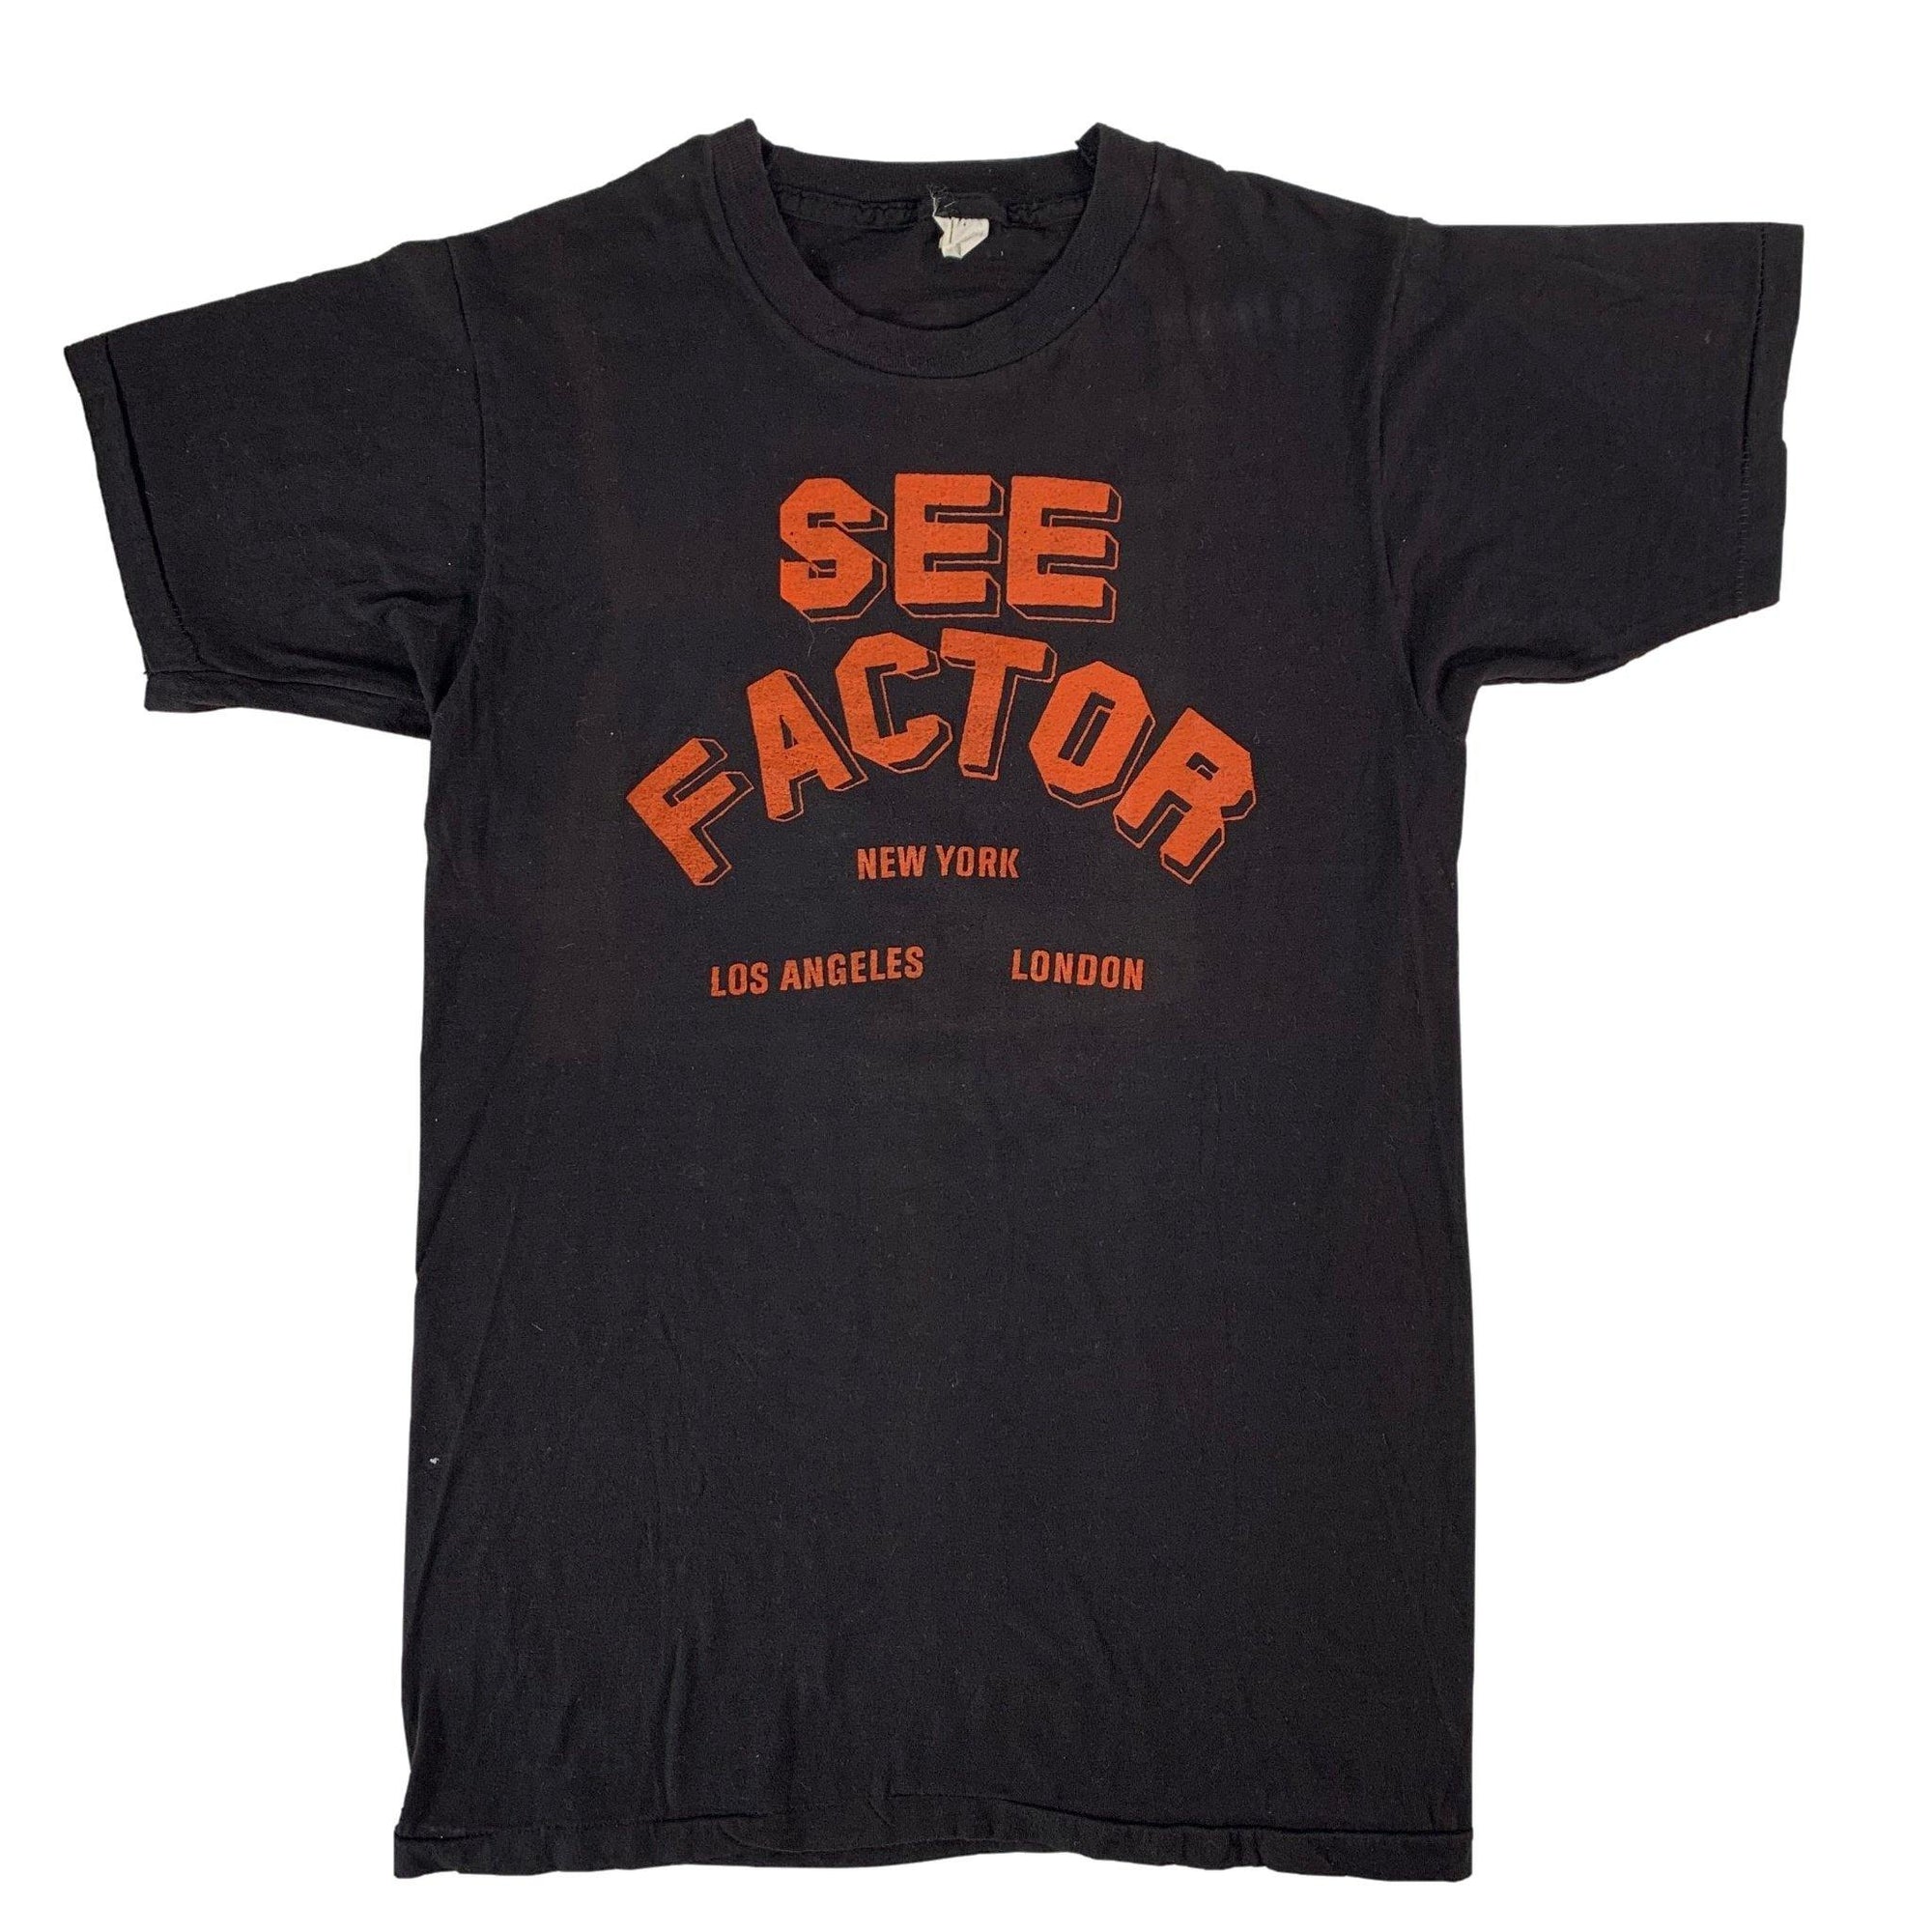 Vintage Rush "See Factor" T-Shirt - jointcustodydc